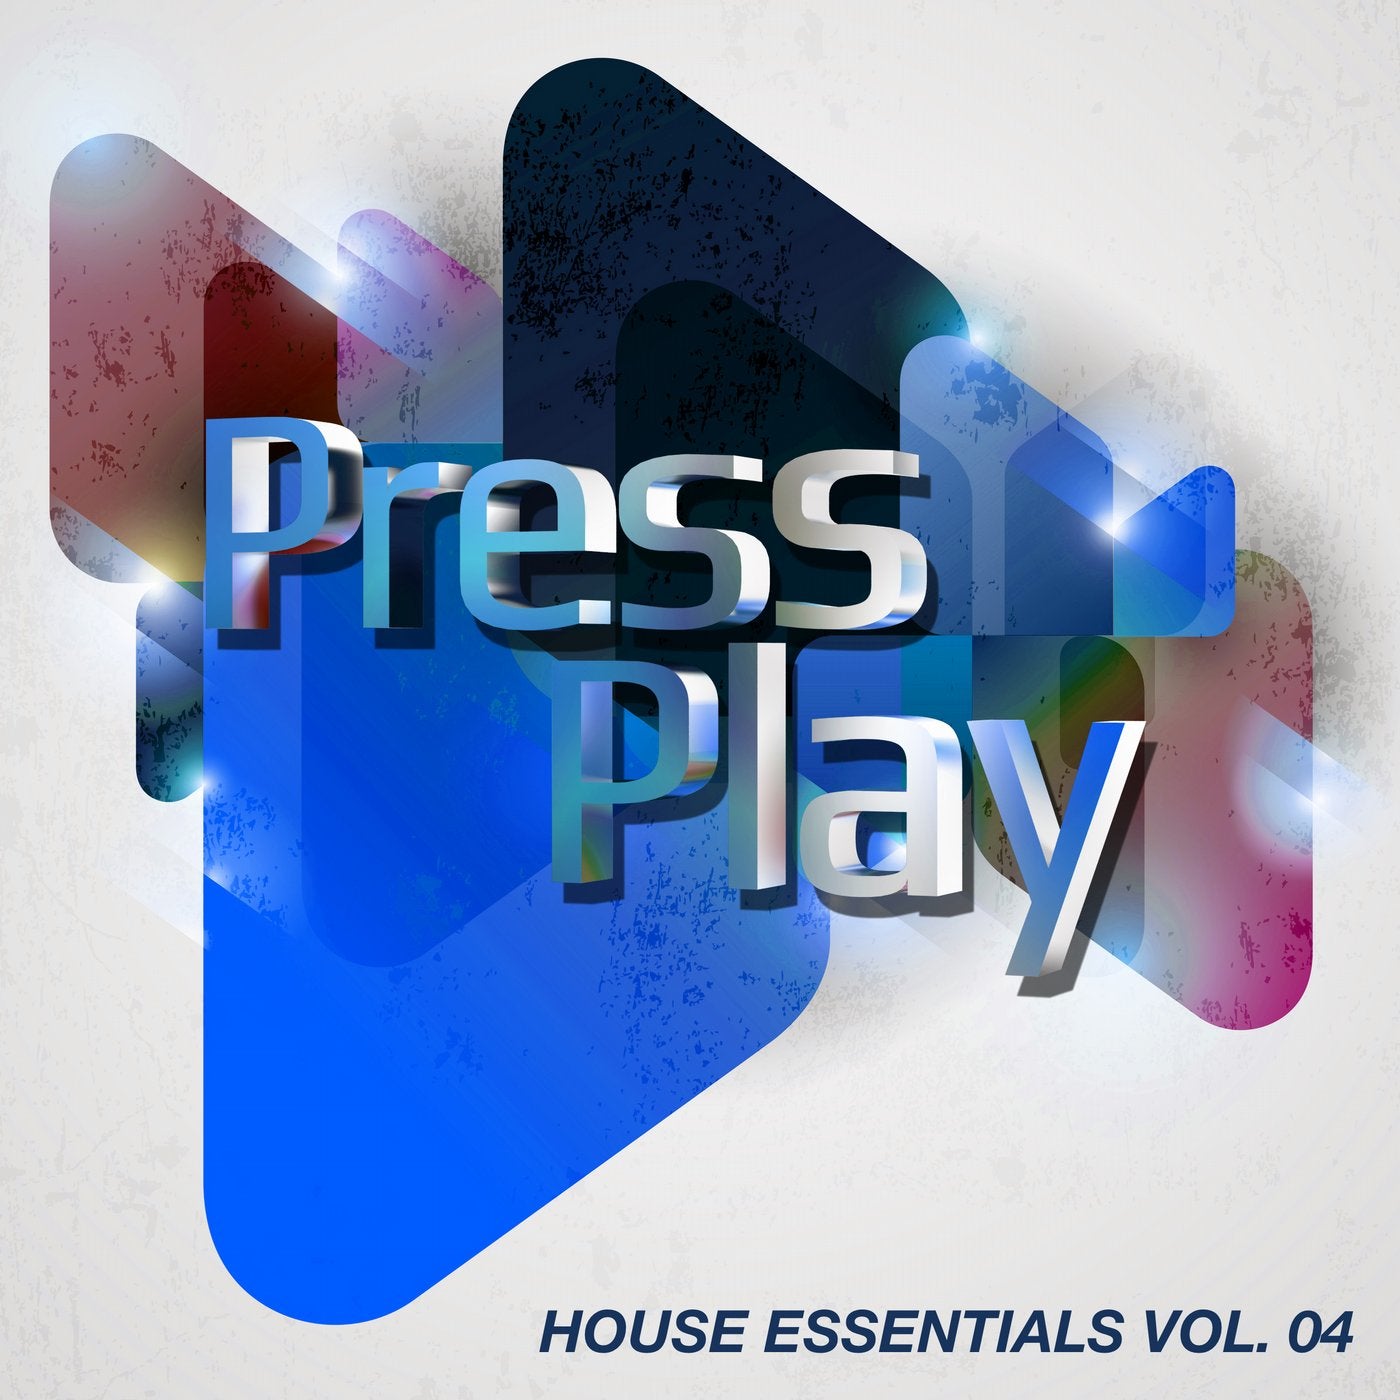 House Essentials Vol. 04